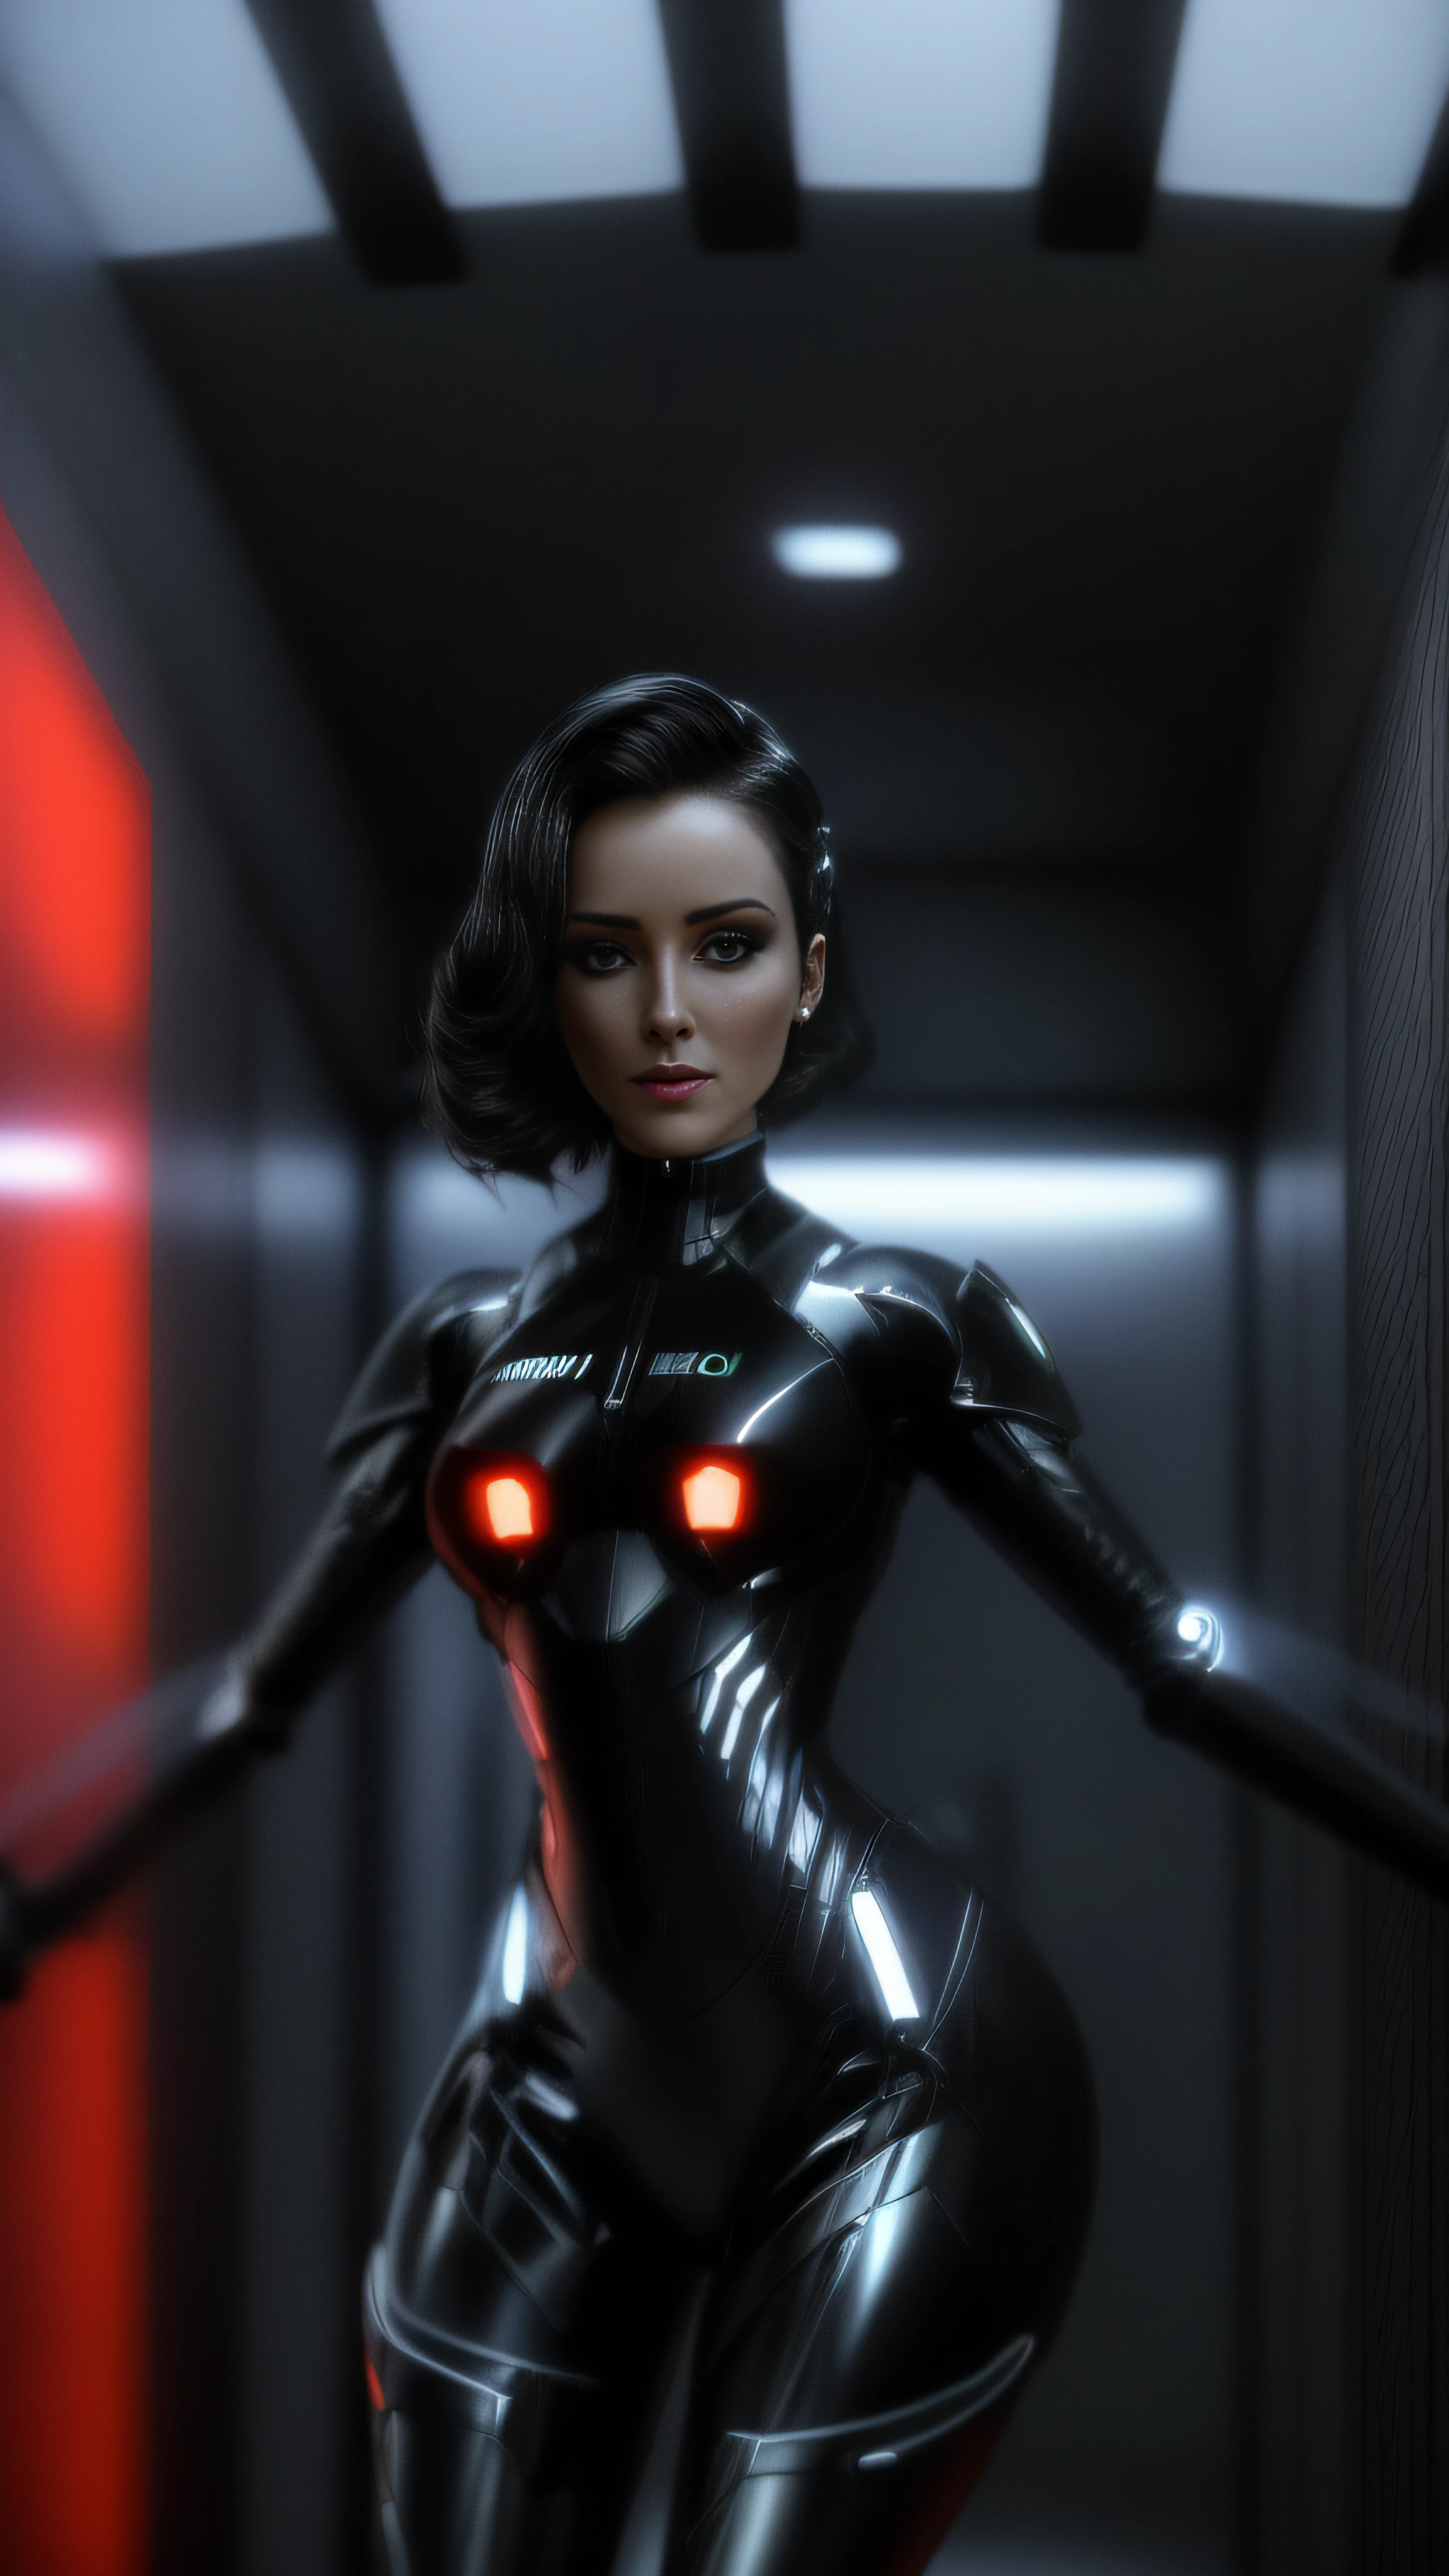 A closeup of a woman in a black suit standing in a room, 3 d render arte do caractere 8 k, sci-fi android feminino, sci fi female character, 8k portrait render, sci - personagem de fi, cybernetic suit, Arte cyberpunk 8K ultrarrealista,  ciborgue bonito, sci-fi feminino, cybernetic suit, scifi character render, beautiful female android